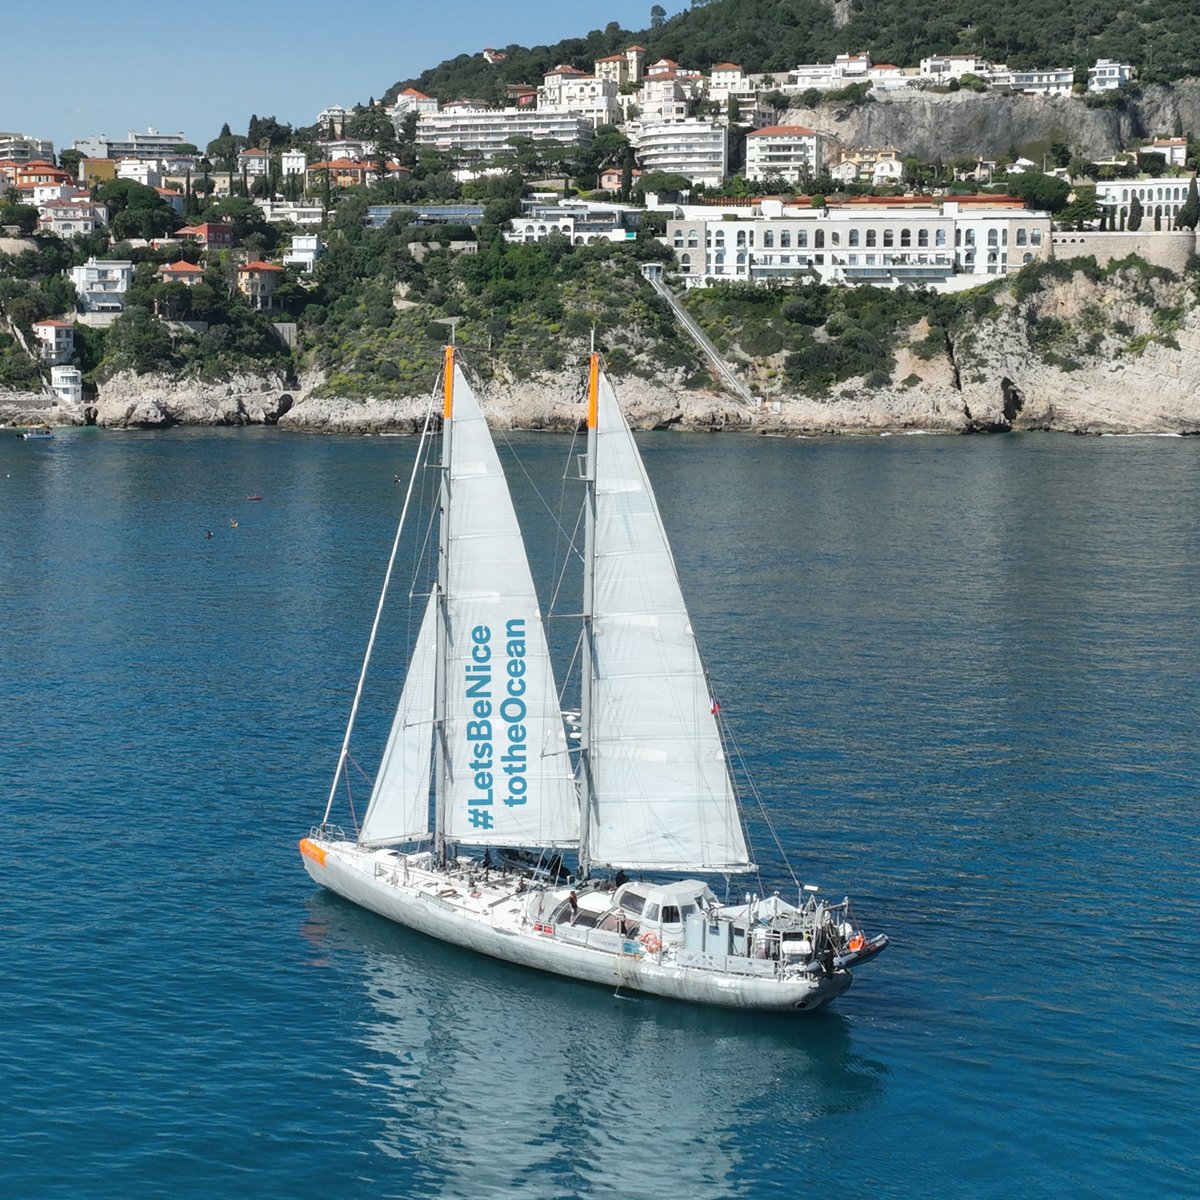 Today in Nice, where the 3rd UN #Ocean Conference will take place in June 2025, the schooner Tara, of our partner @TaraOcean_, enters the harbour. Very nice! #LetsBeNicetotheOcean #UNOC2025 📸 (c) Sylvain Elfassy - Fondation Tara Océan @TaraOcean_